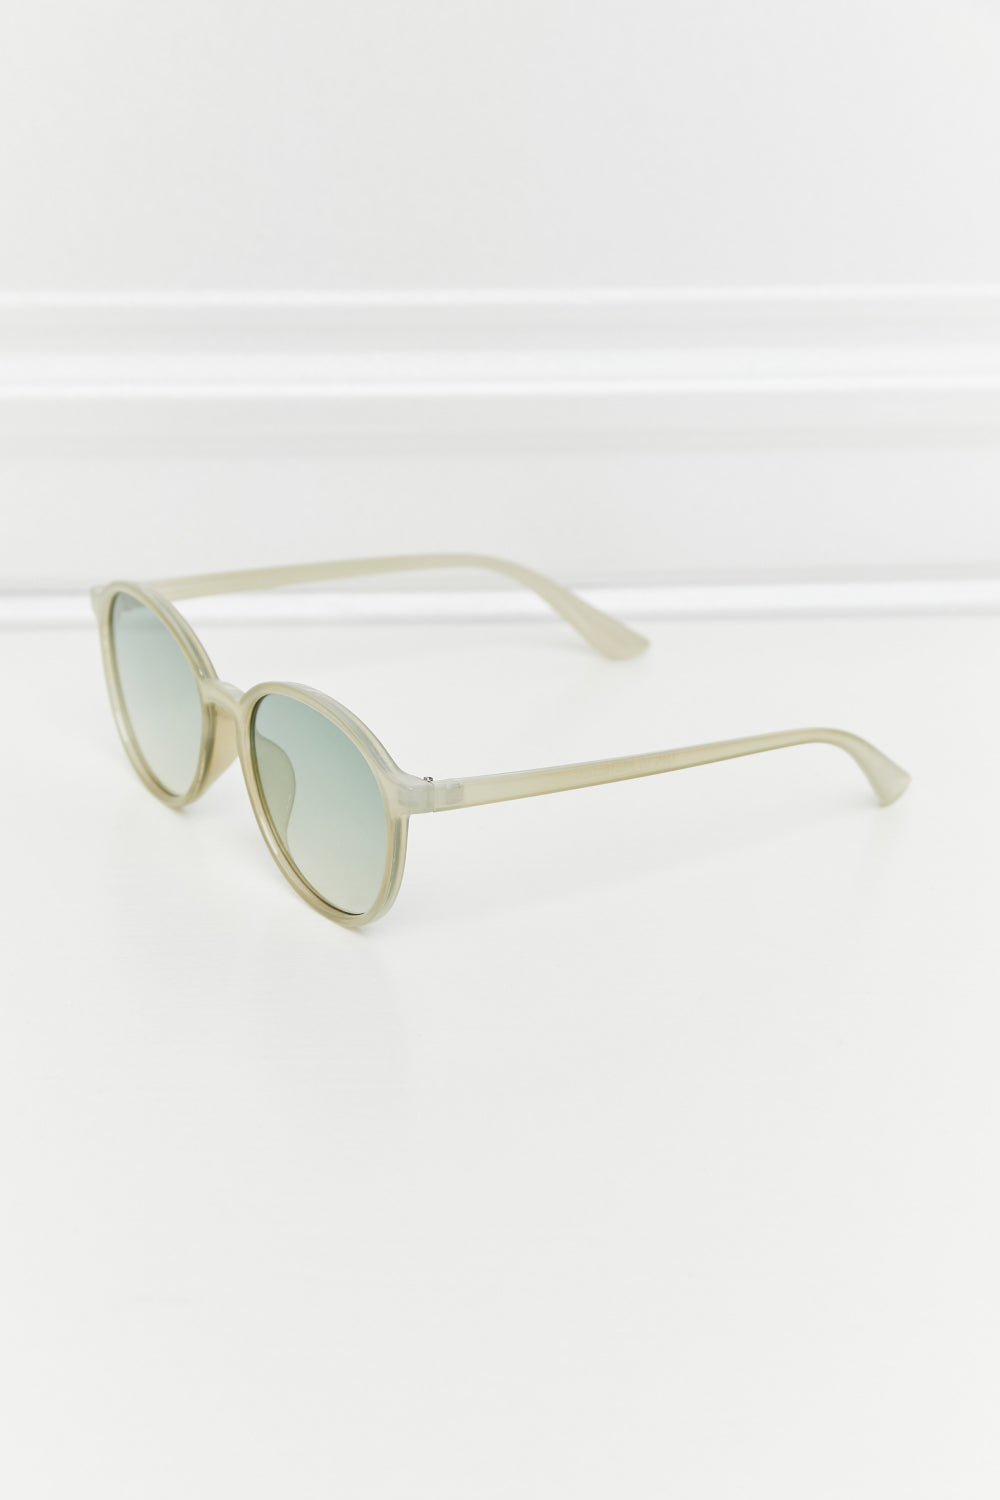 Full Rim Polycarbonate Frame Sunglasses - The Fashion Unicorn